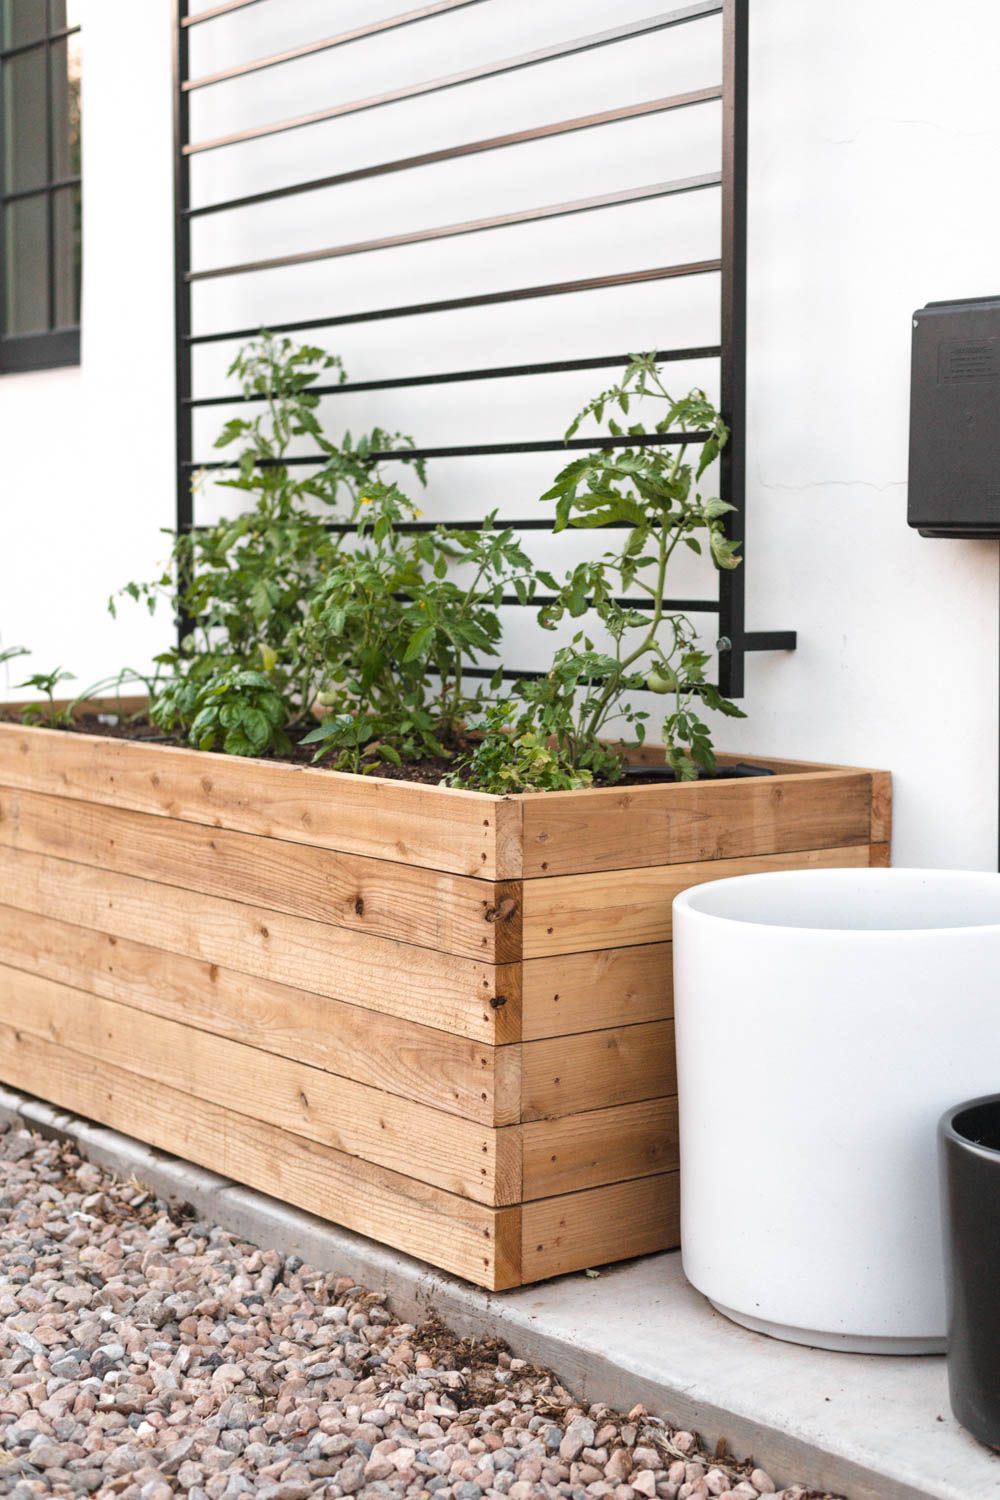 Create Your Own DIY Garden Planter Boxes for a Beautiful Outdoor Space